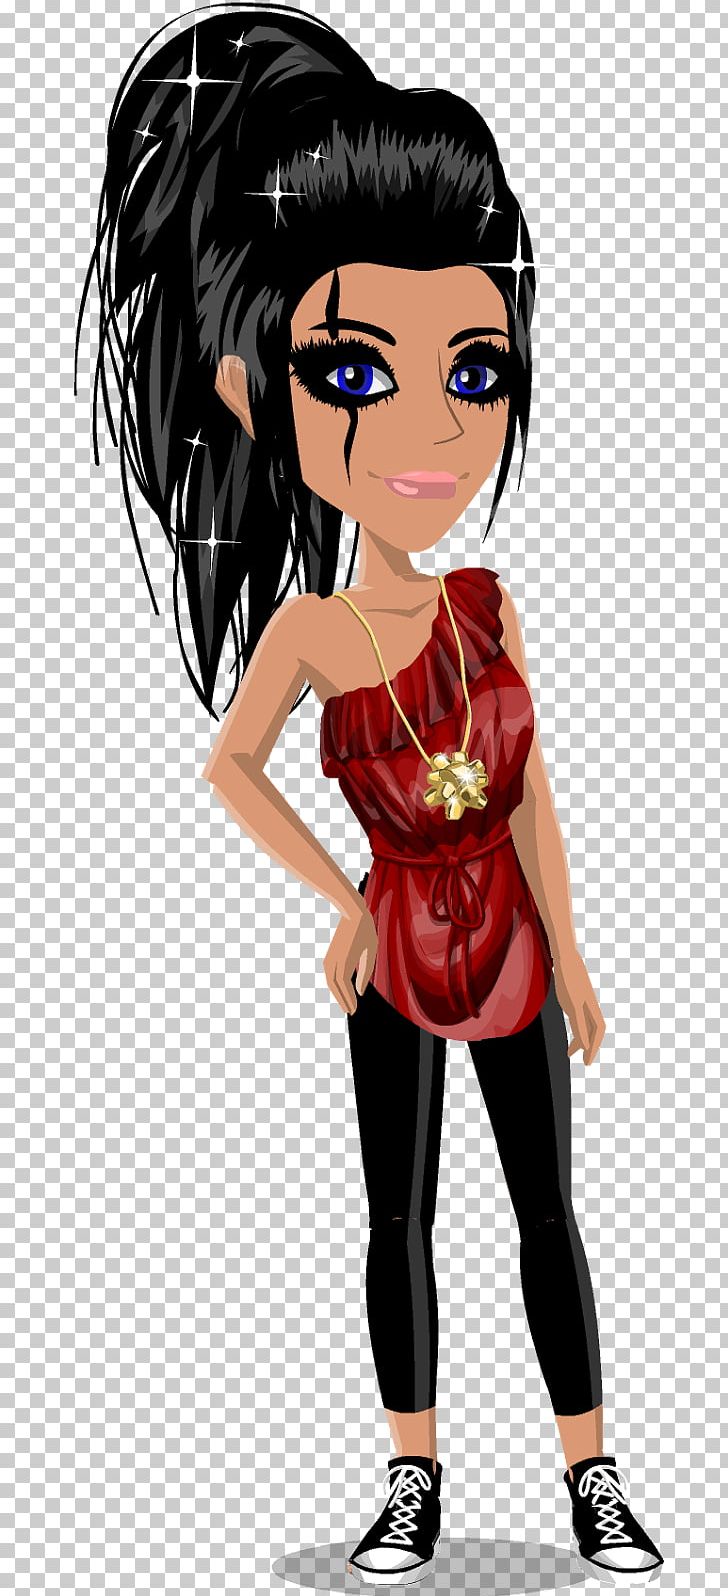 MovieStarPlanet Character Person Avatar PNG, Clipart, Avatar, Black Hair, Brown Hair, Cartoon, Character Free PNG Download